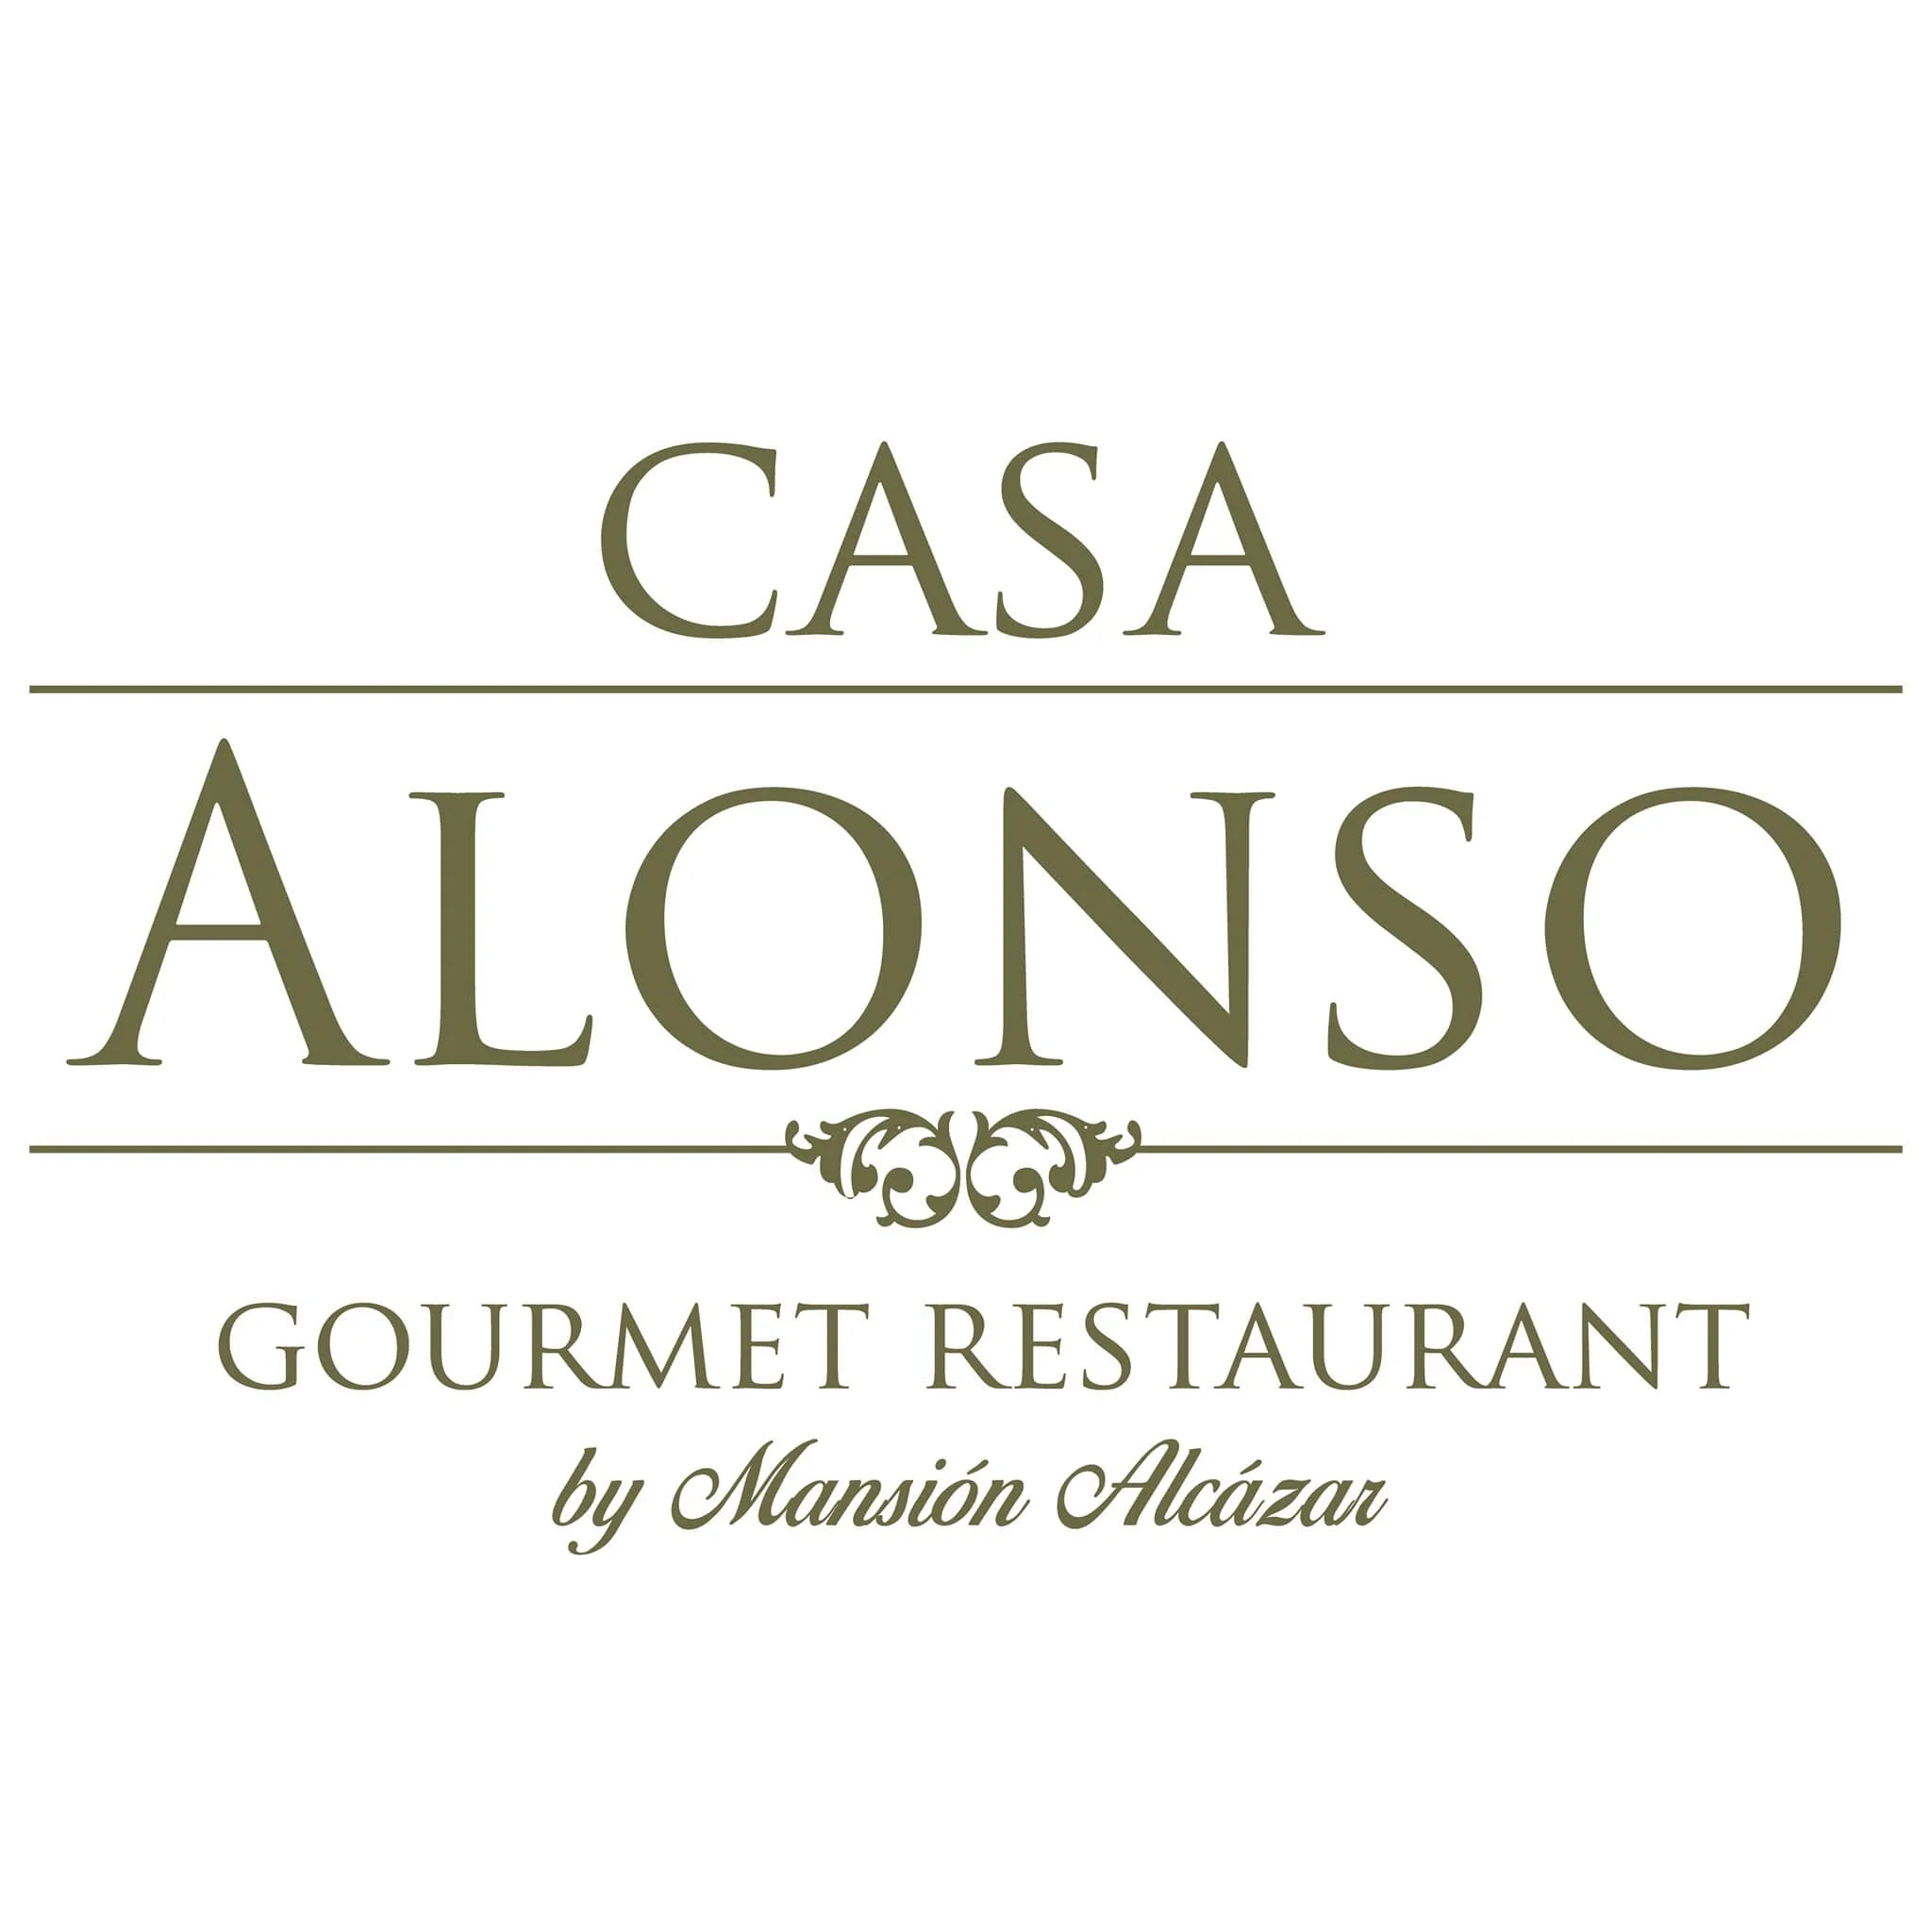 Restaurantes-casa-alonso-gourmet-restaurant-18484